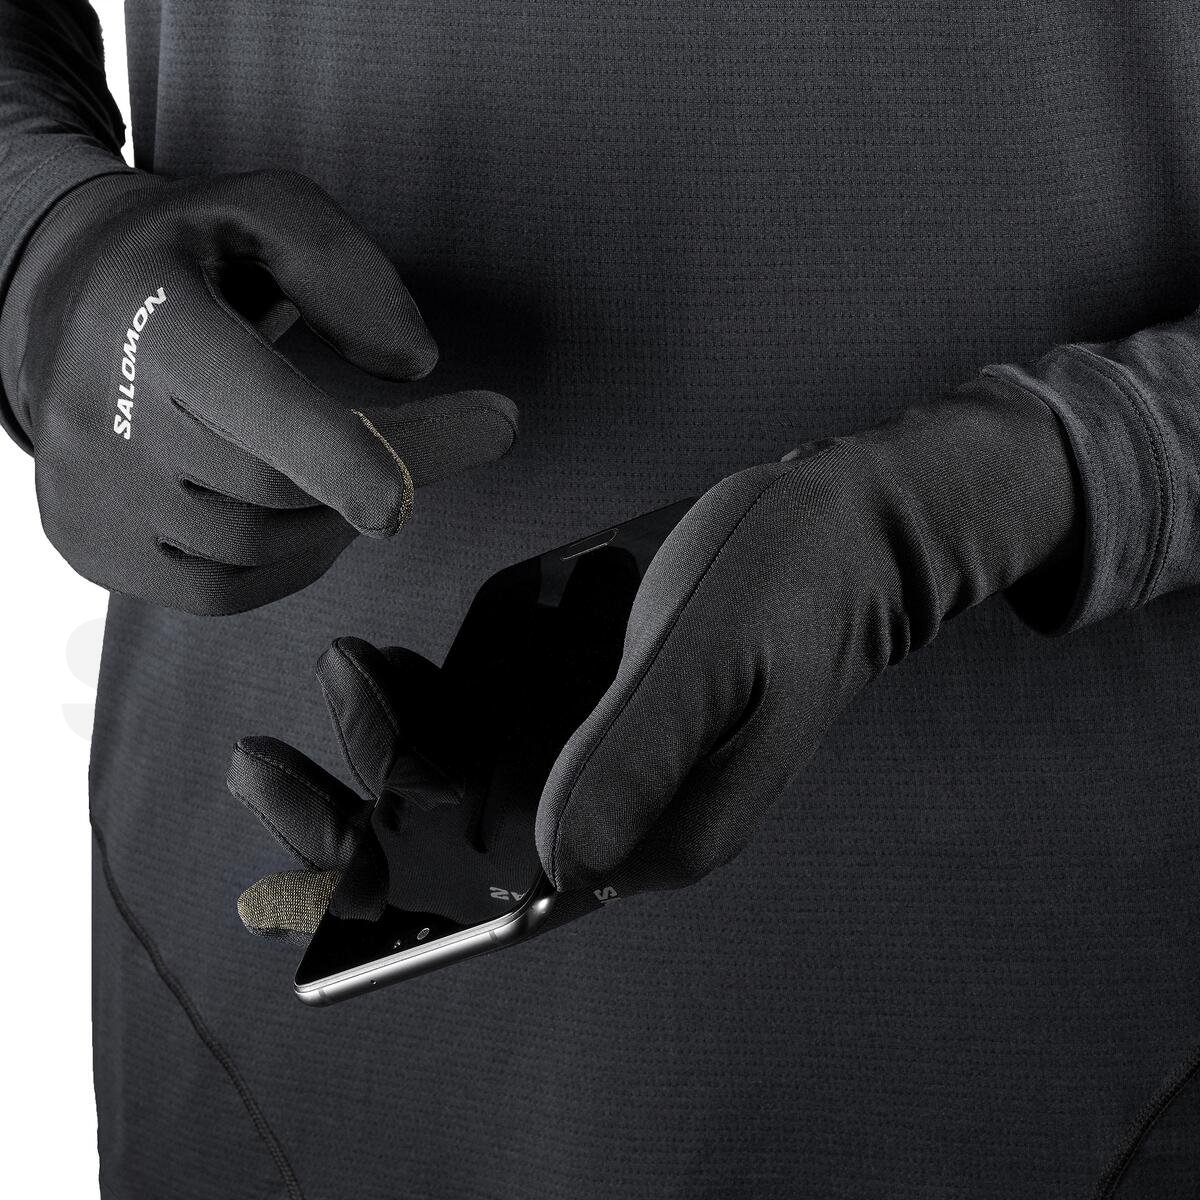 Rukavice Salomon Cross Warm Glove - černá